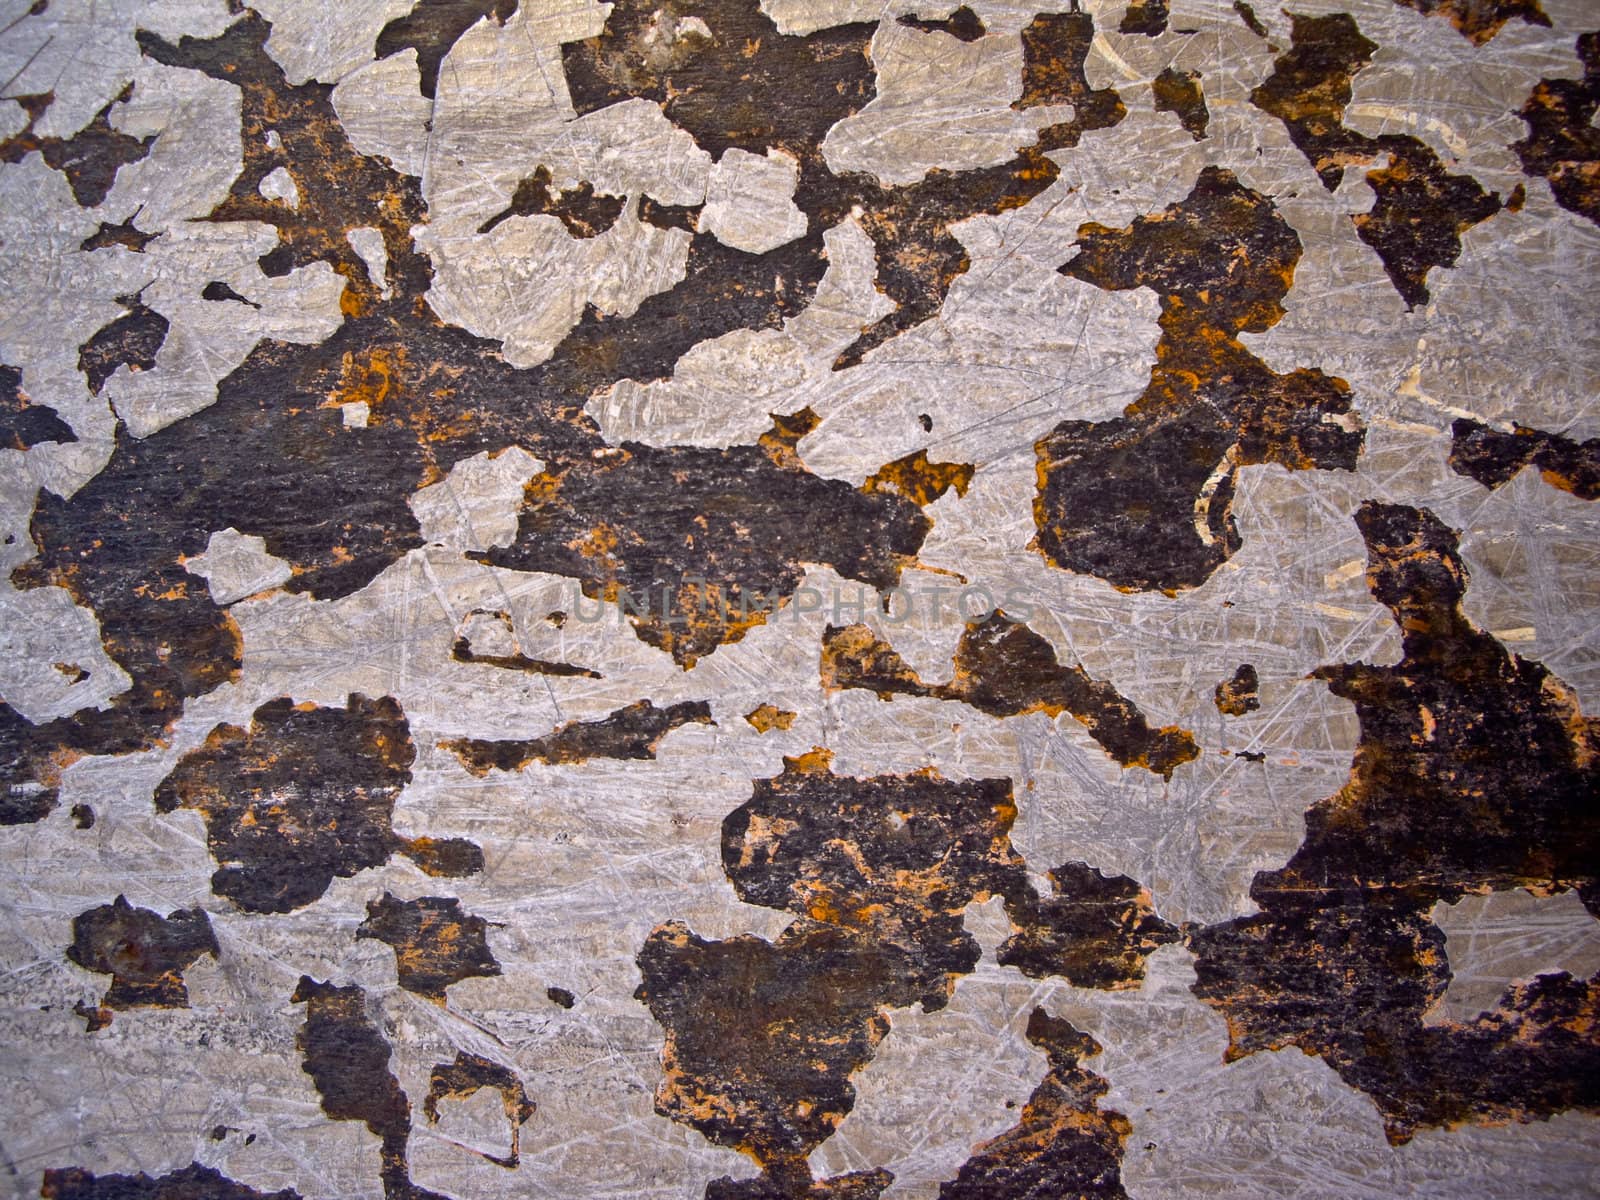 Oxidation causes rust on metal